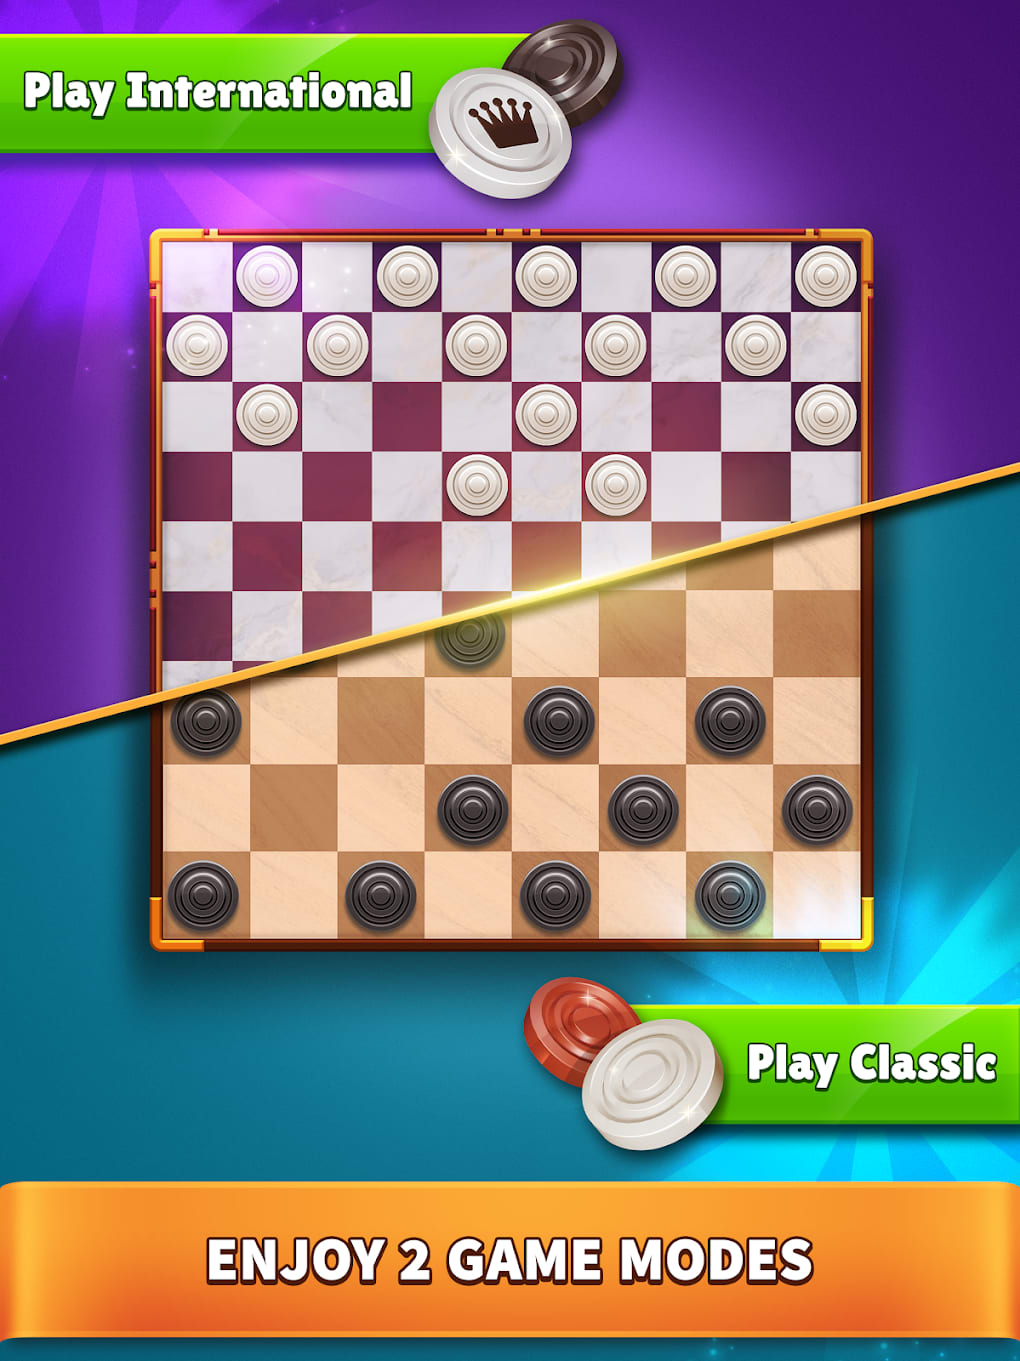 Checkers - Play free